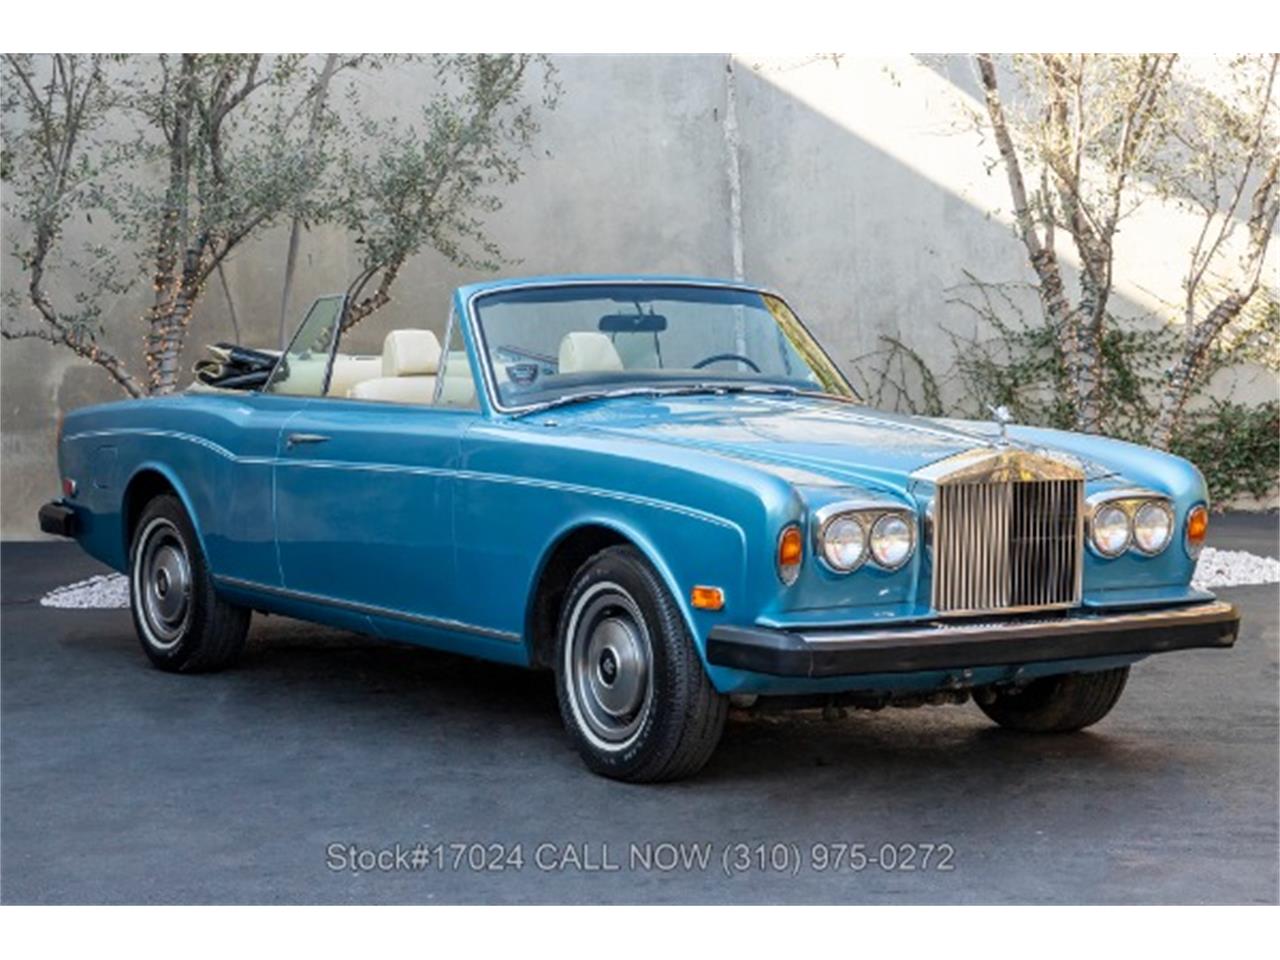 For Sale: 1974 Rolls-Royce Corniche in Beverly Hills, California for sale in Beverly Hills, CA